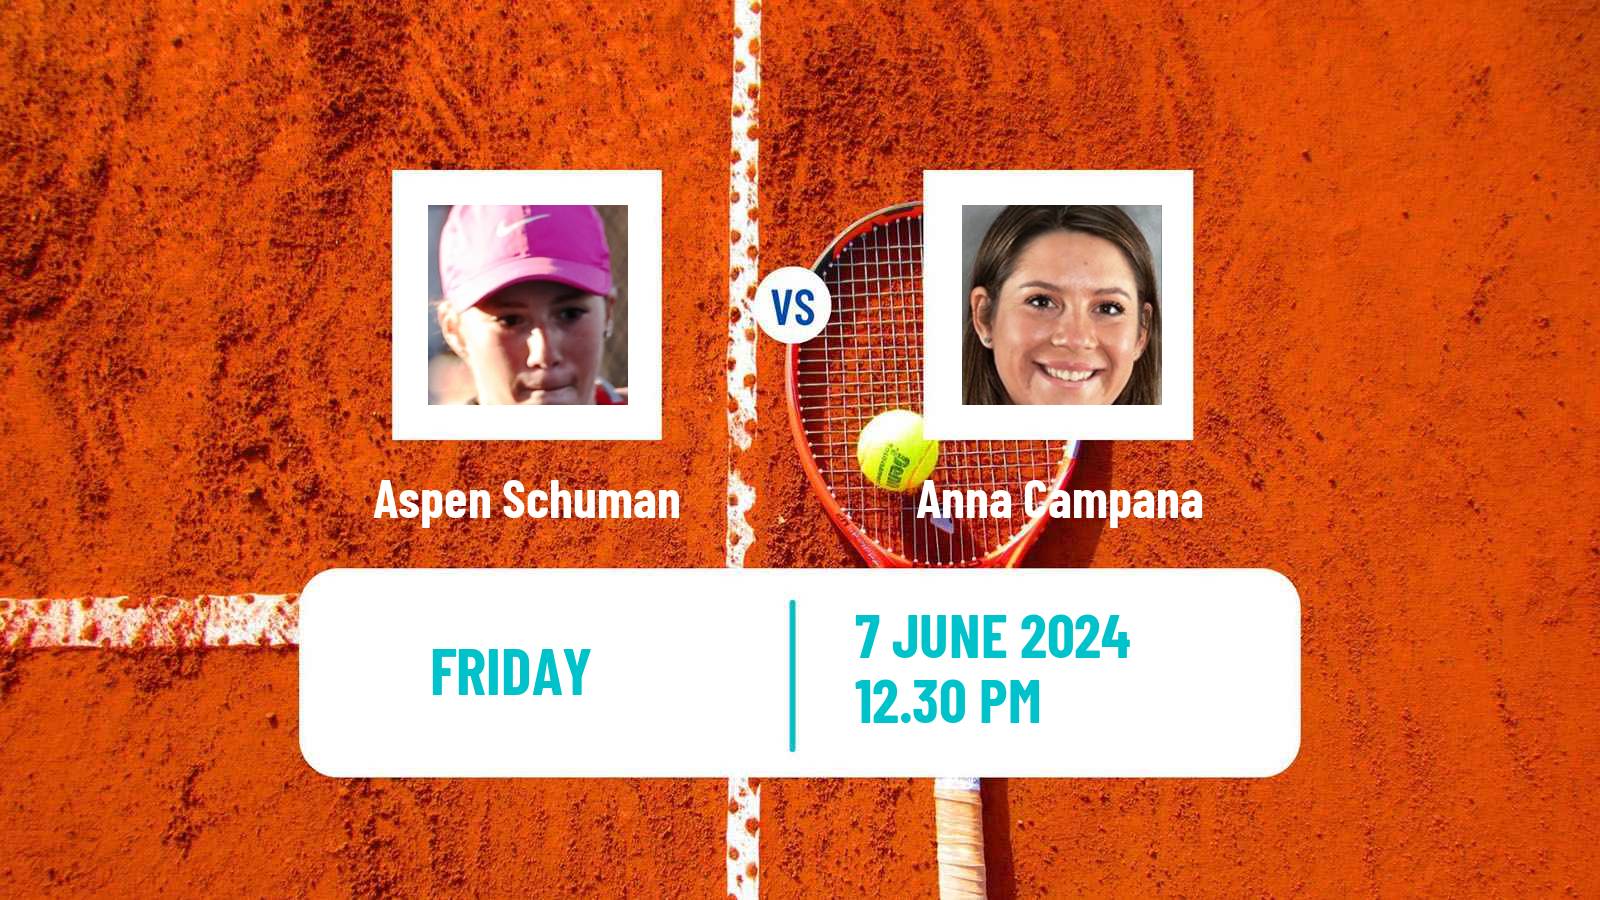 Tennis ITF W15 San Diego Ca 2 Women Aspen Schuman - Anna Campana